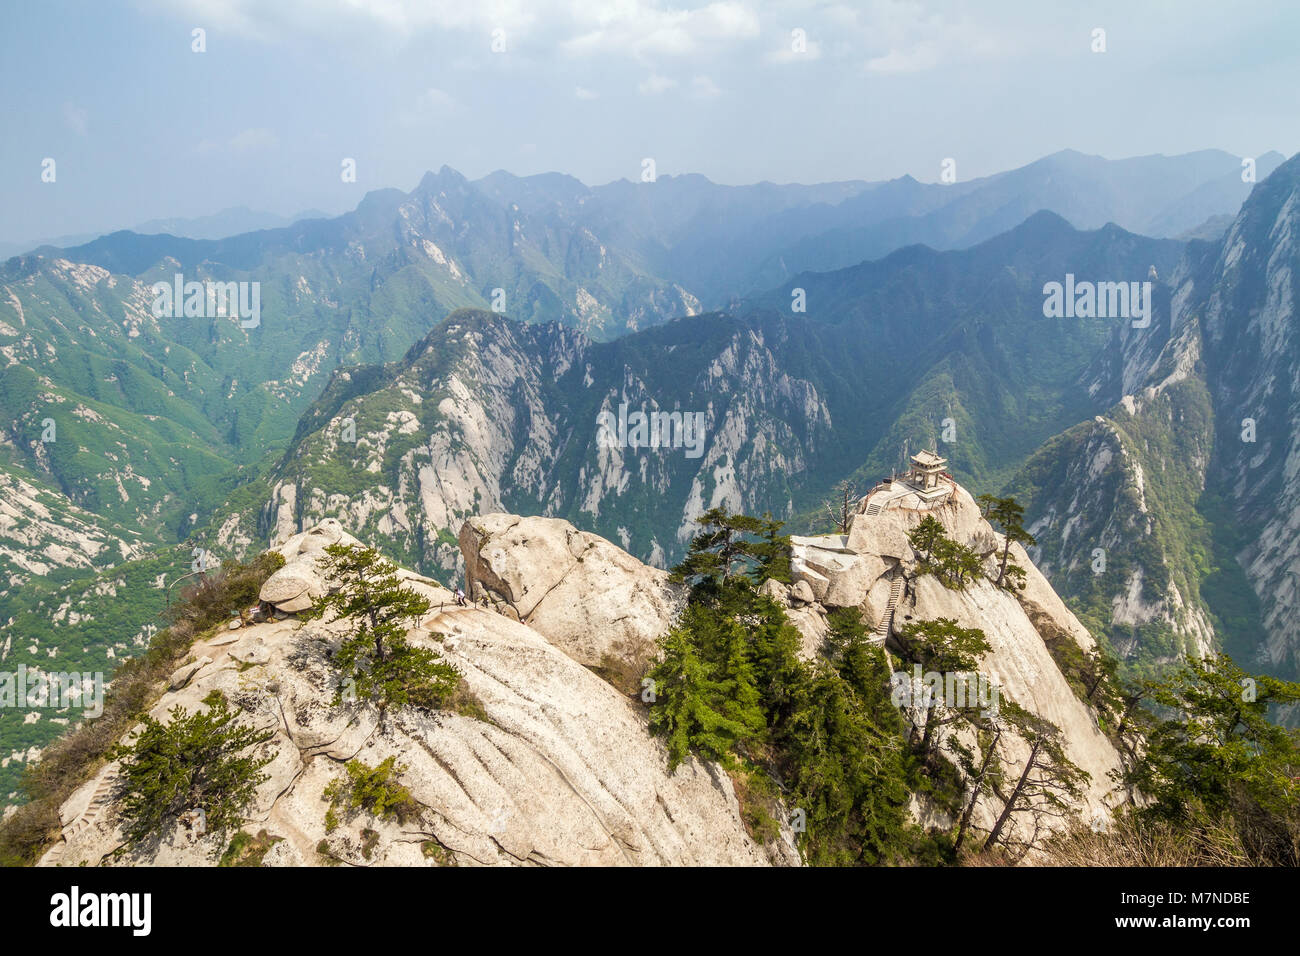 China, Provinz Shaanxi, Huashan Berg, Pavillon auf dem Berg Stockfoto